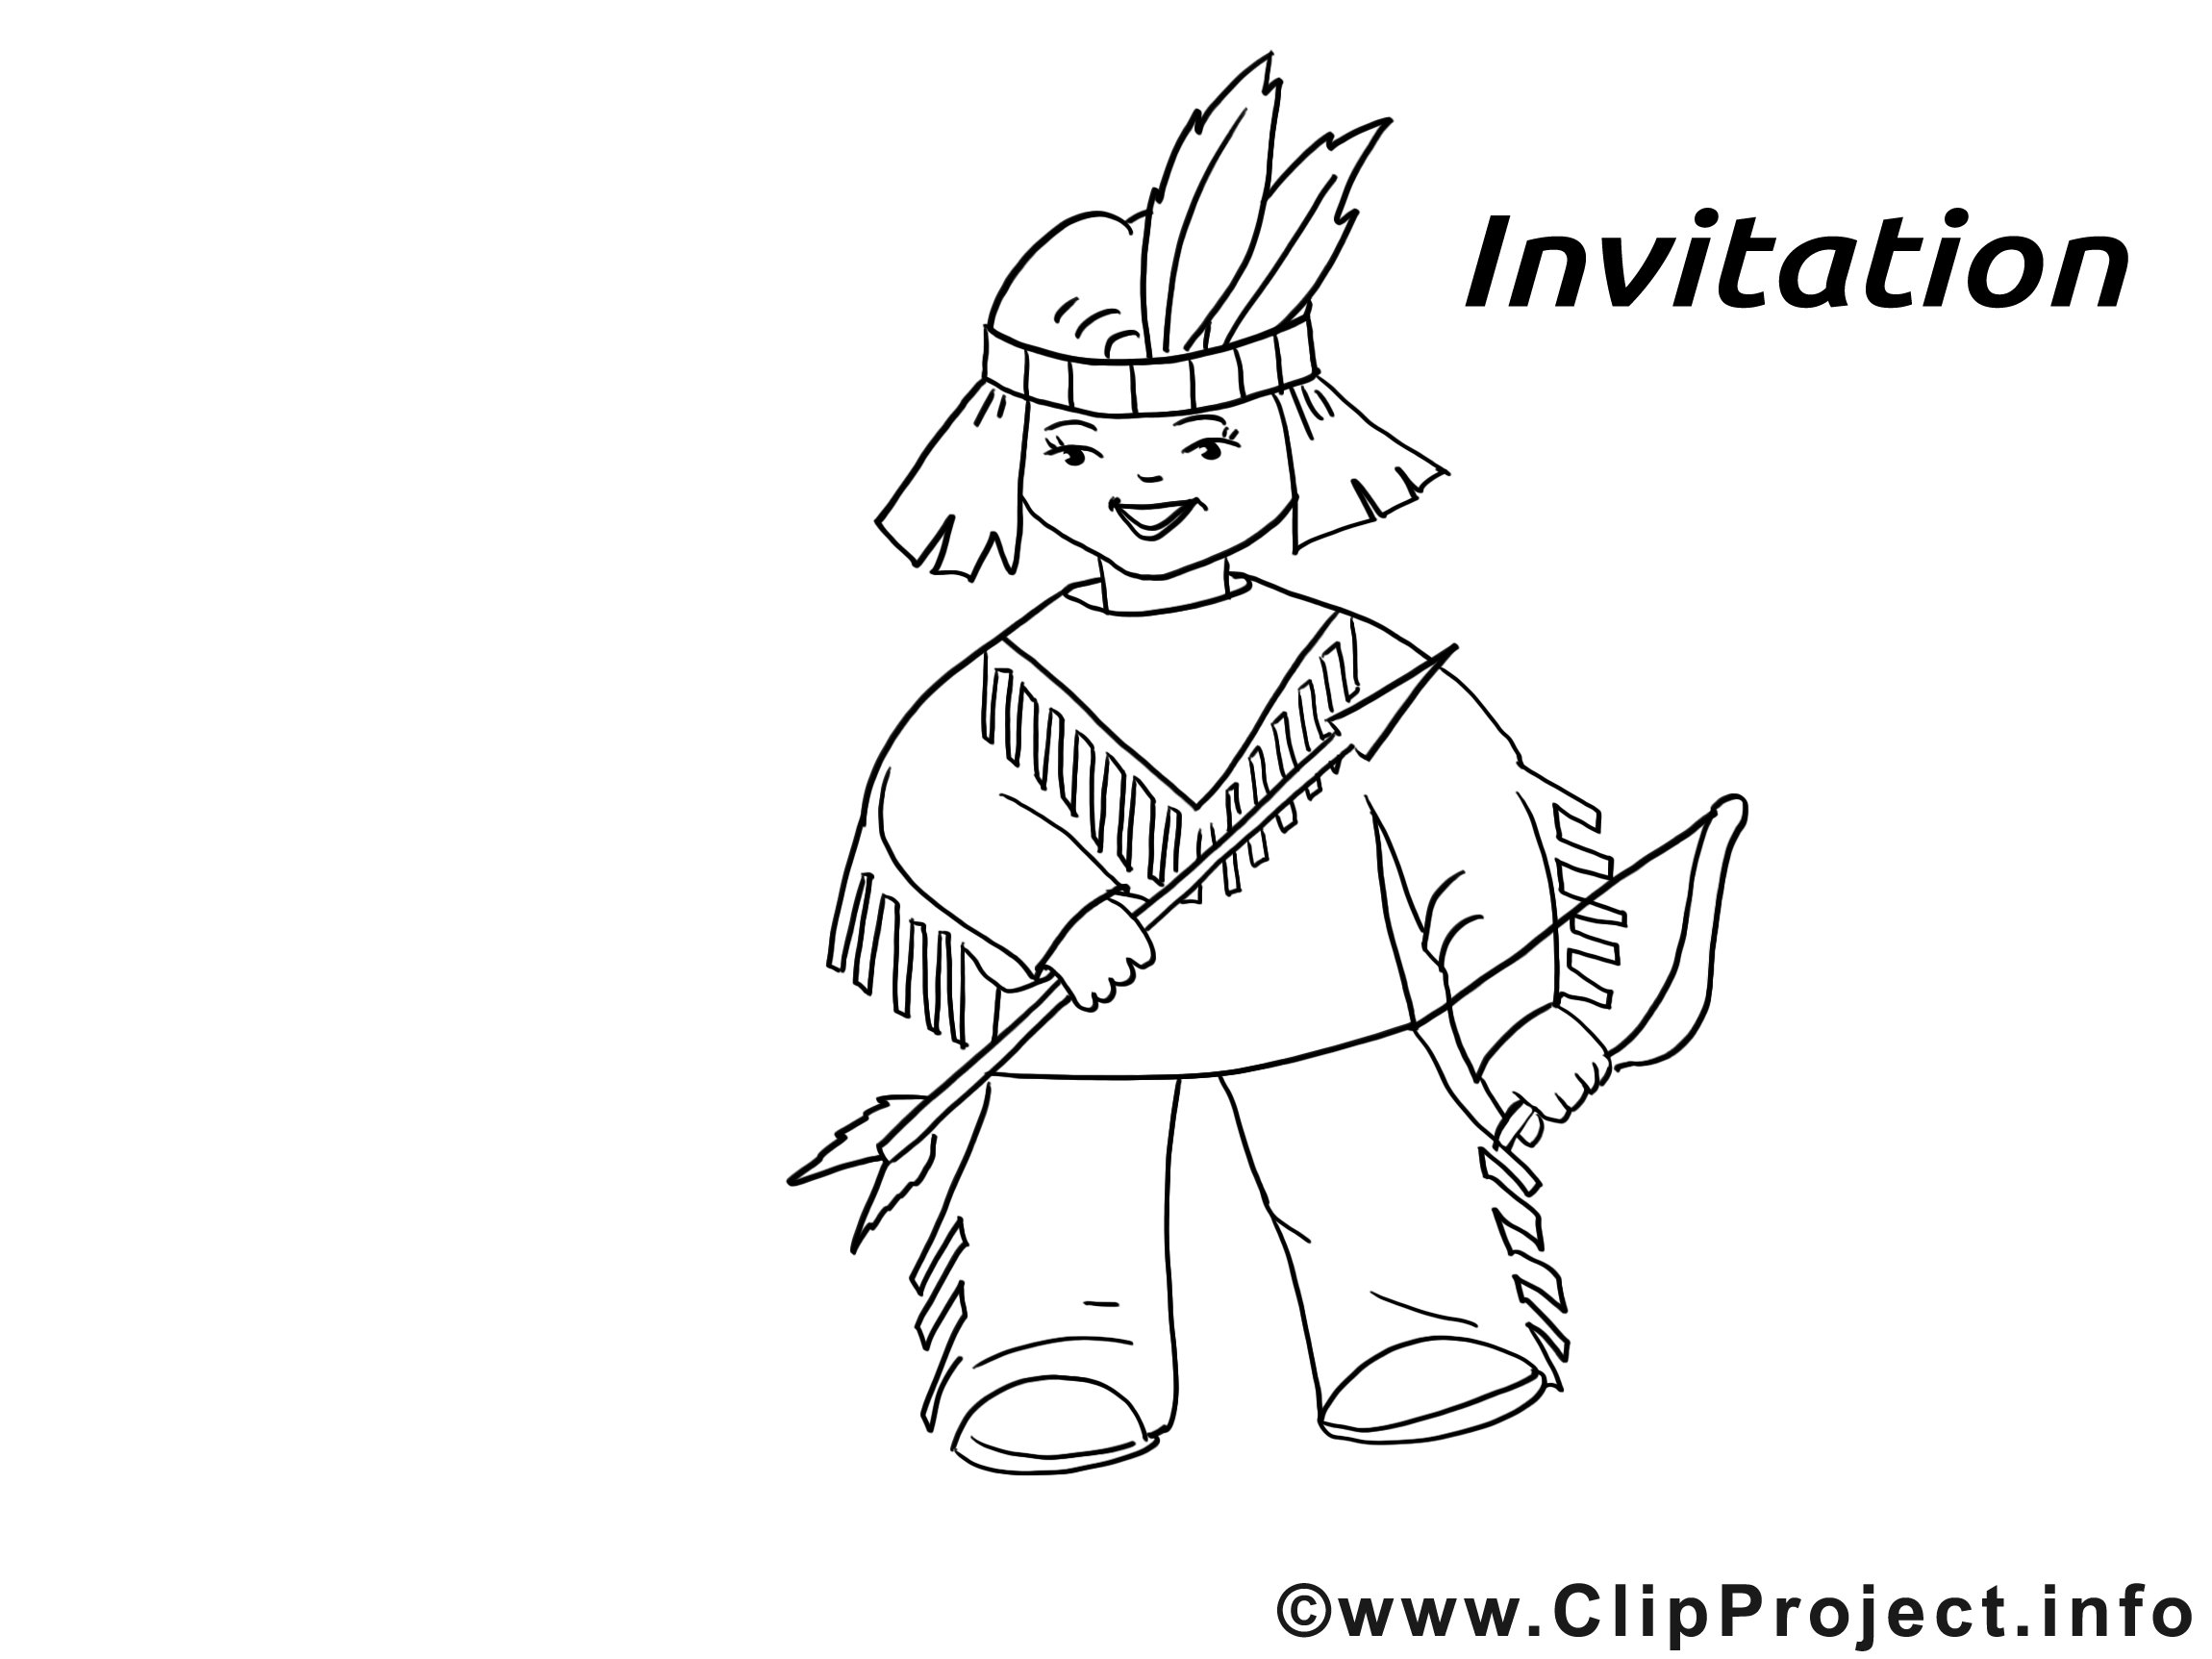 Archer invitation illustration à imprimer gratuite